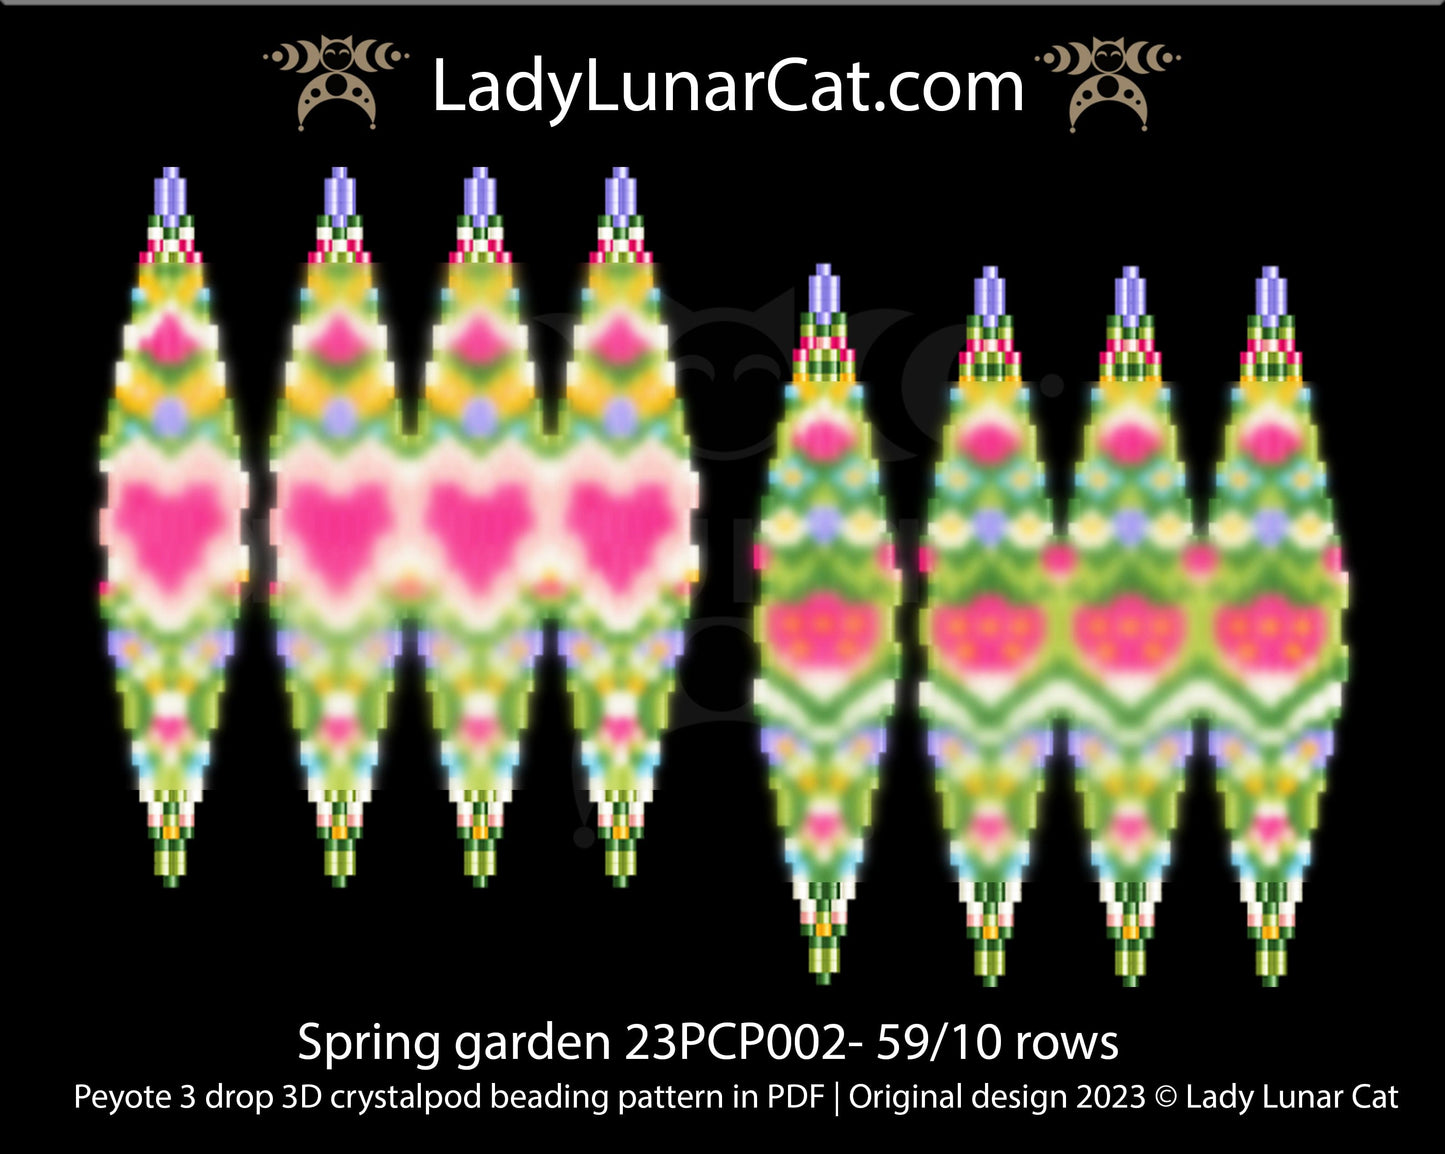 3drop pod pattern or crystalpod pattern for beading Spring garden 23PCP002 LadyLunarCat